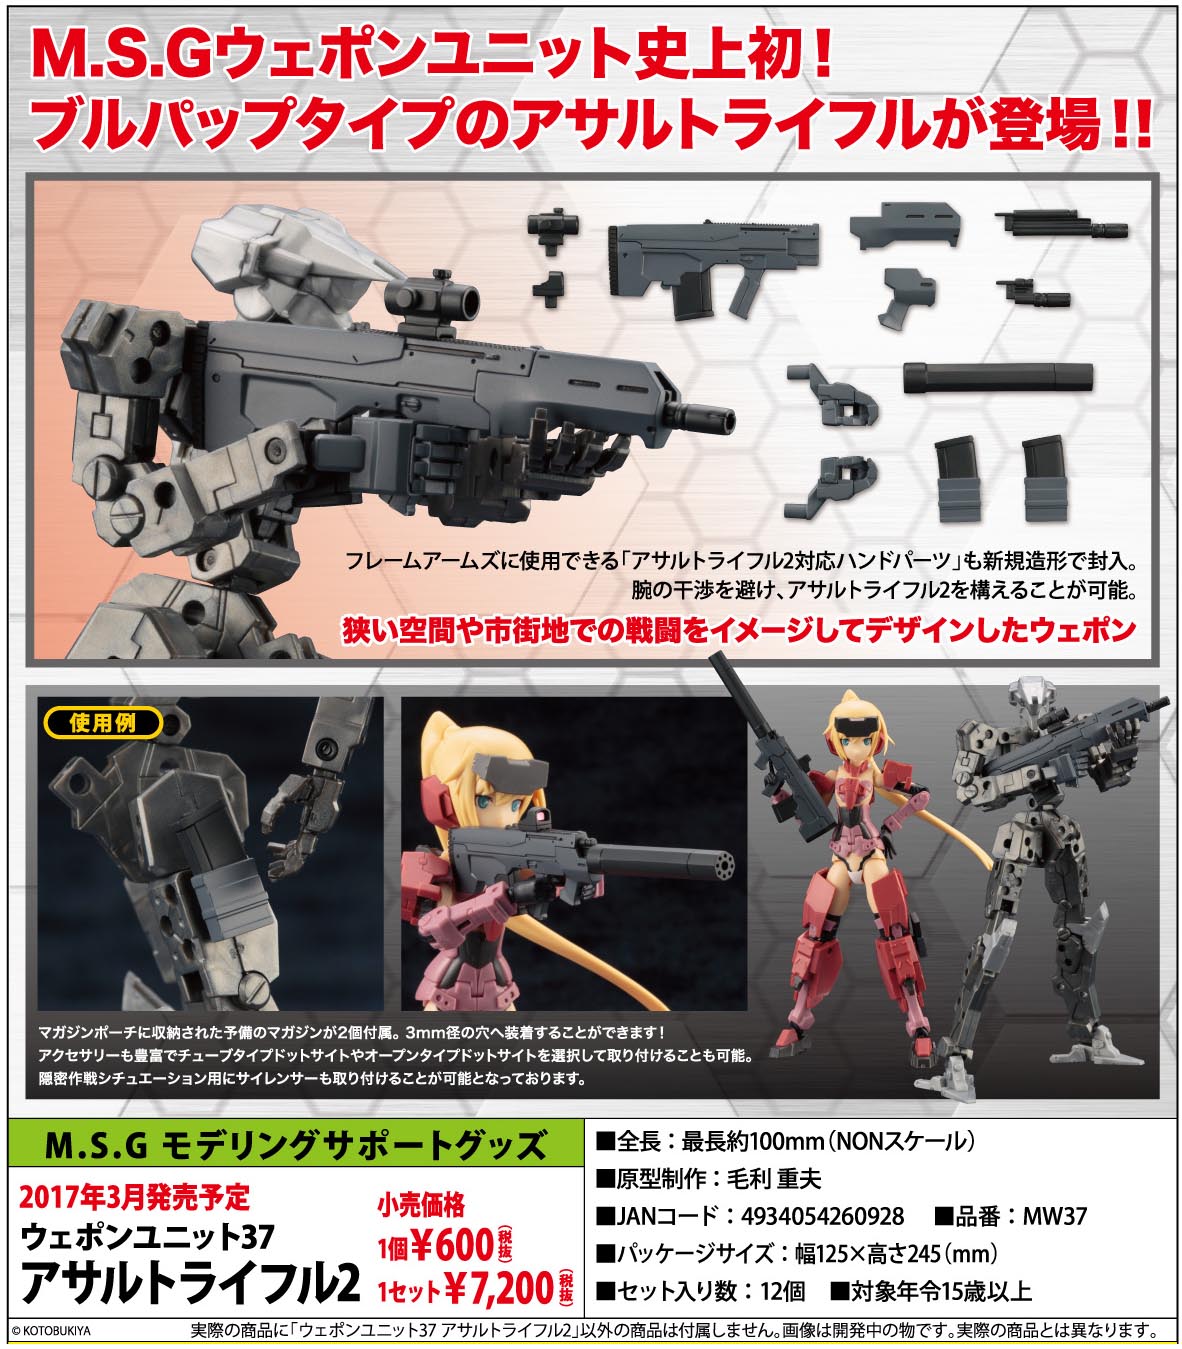 Kotobukiya M.S.G Modeling Support Goods Weapon Unit Assault Rifle 2 